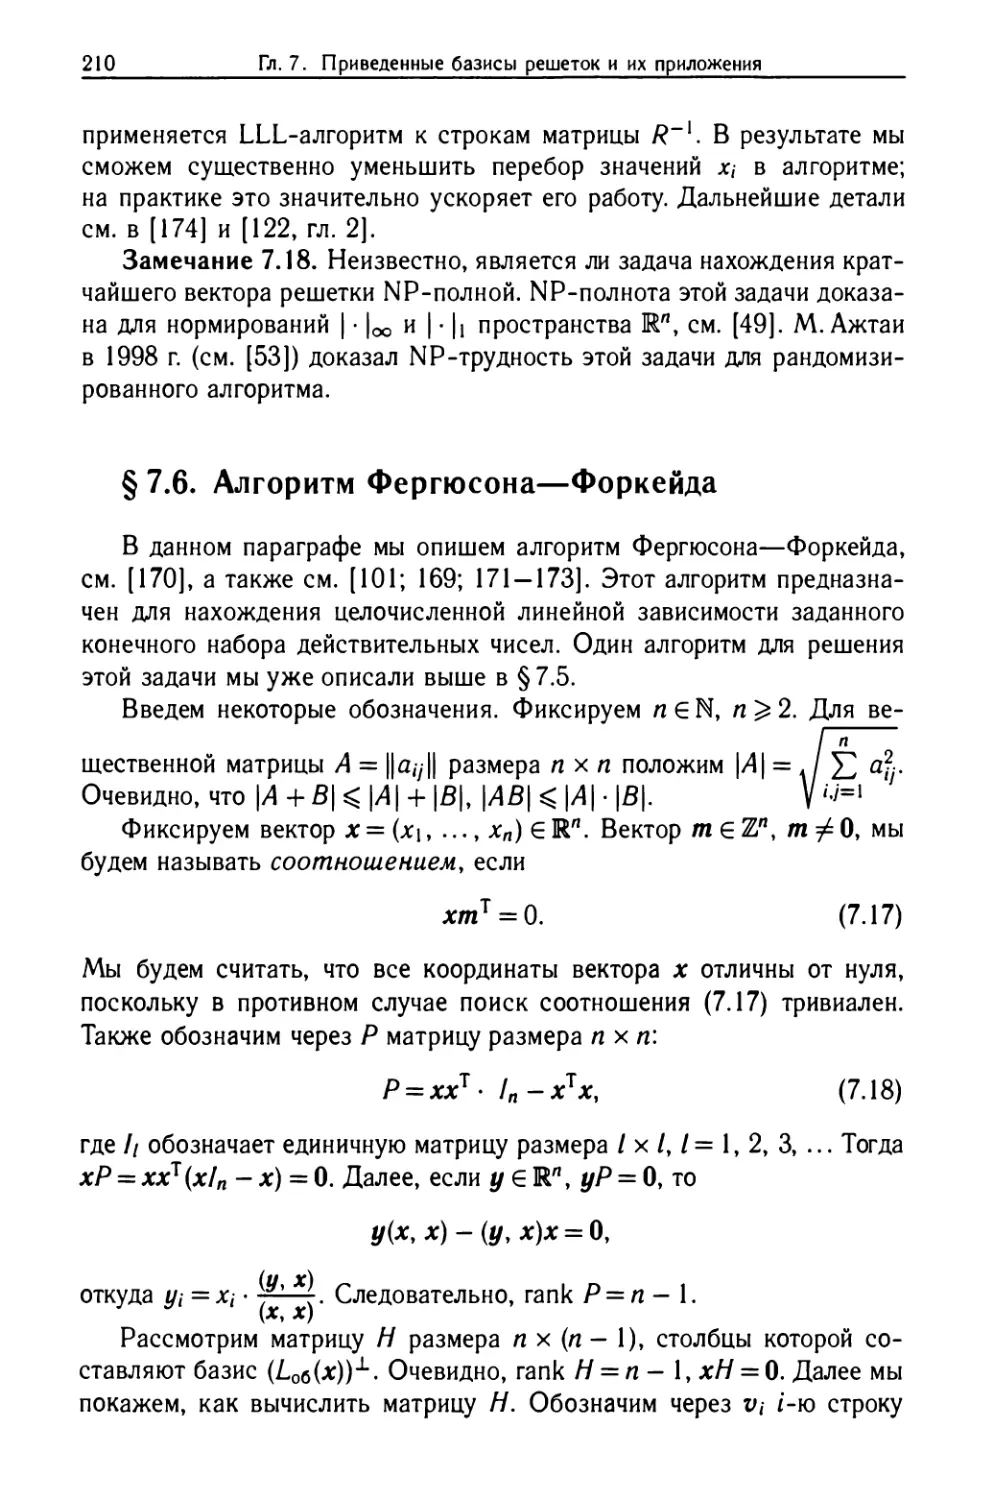 §7.6. Алгоритм Фергюсона-Форкейда